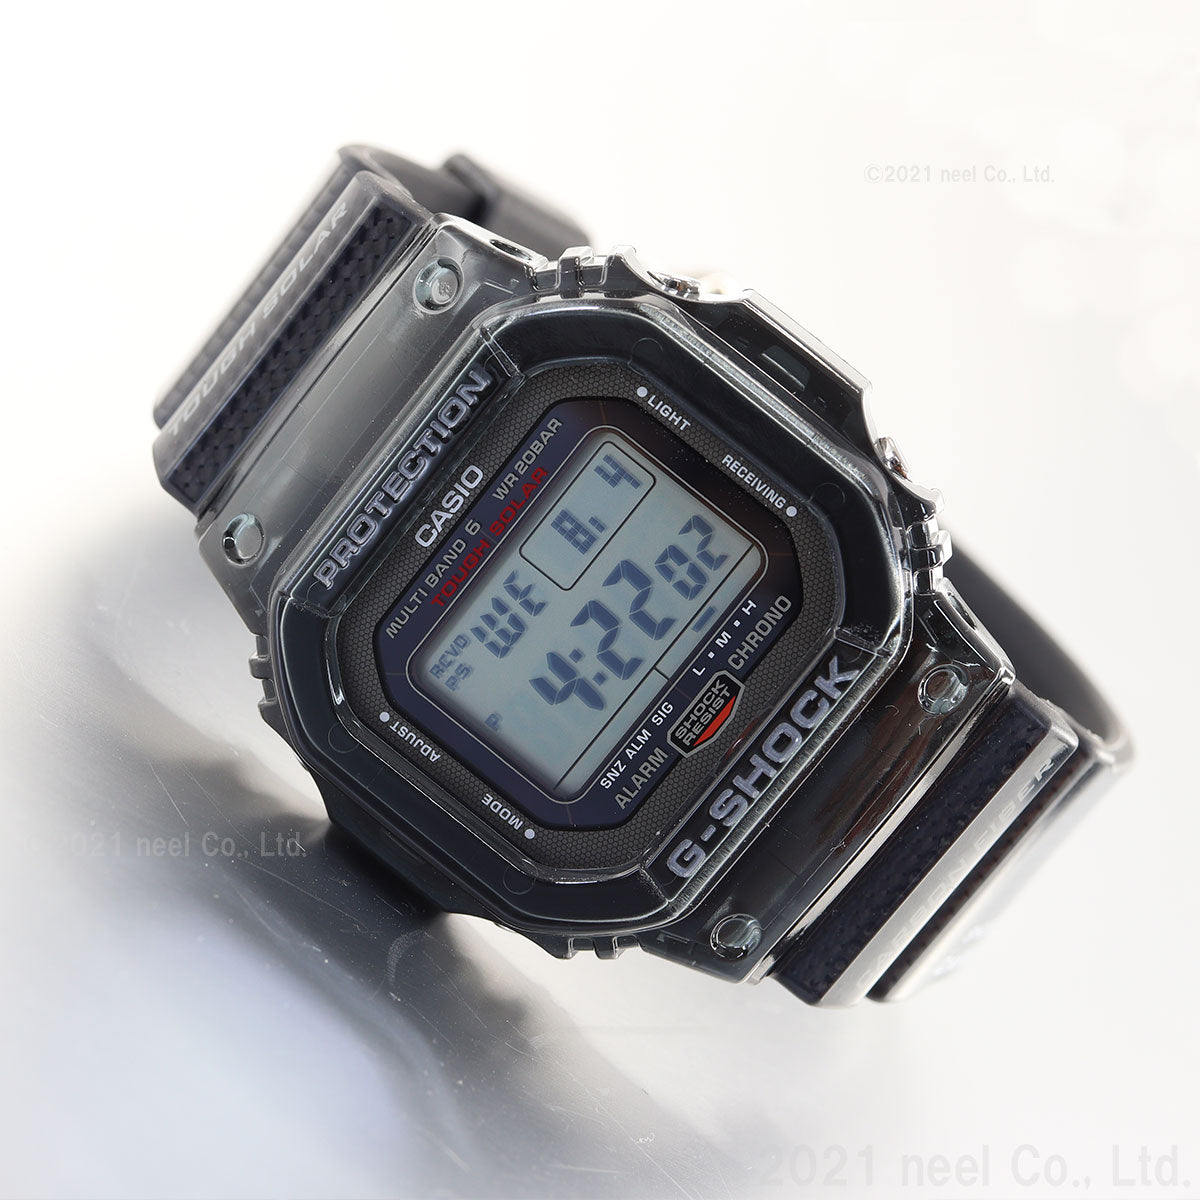 G-SHOCK Gショック GW-S5600U-1JF メンズ 腕時計 電波ソーラー タフ